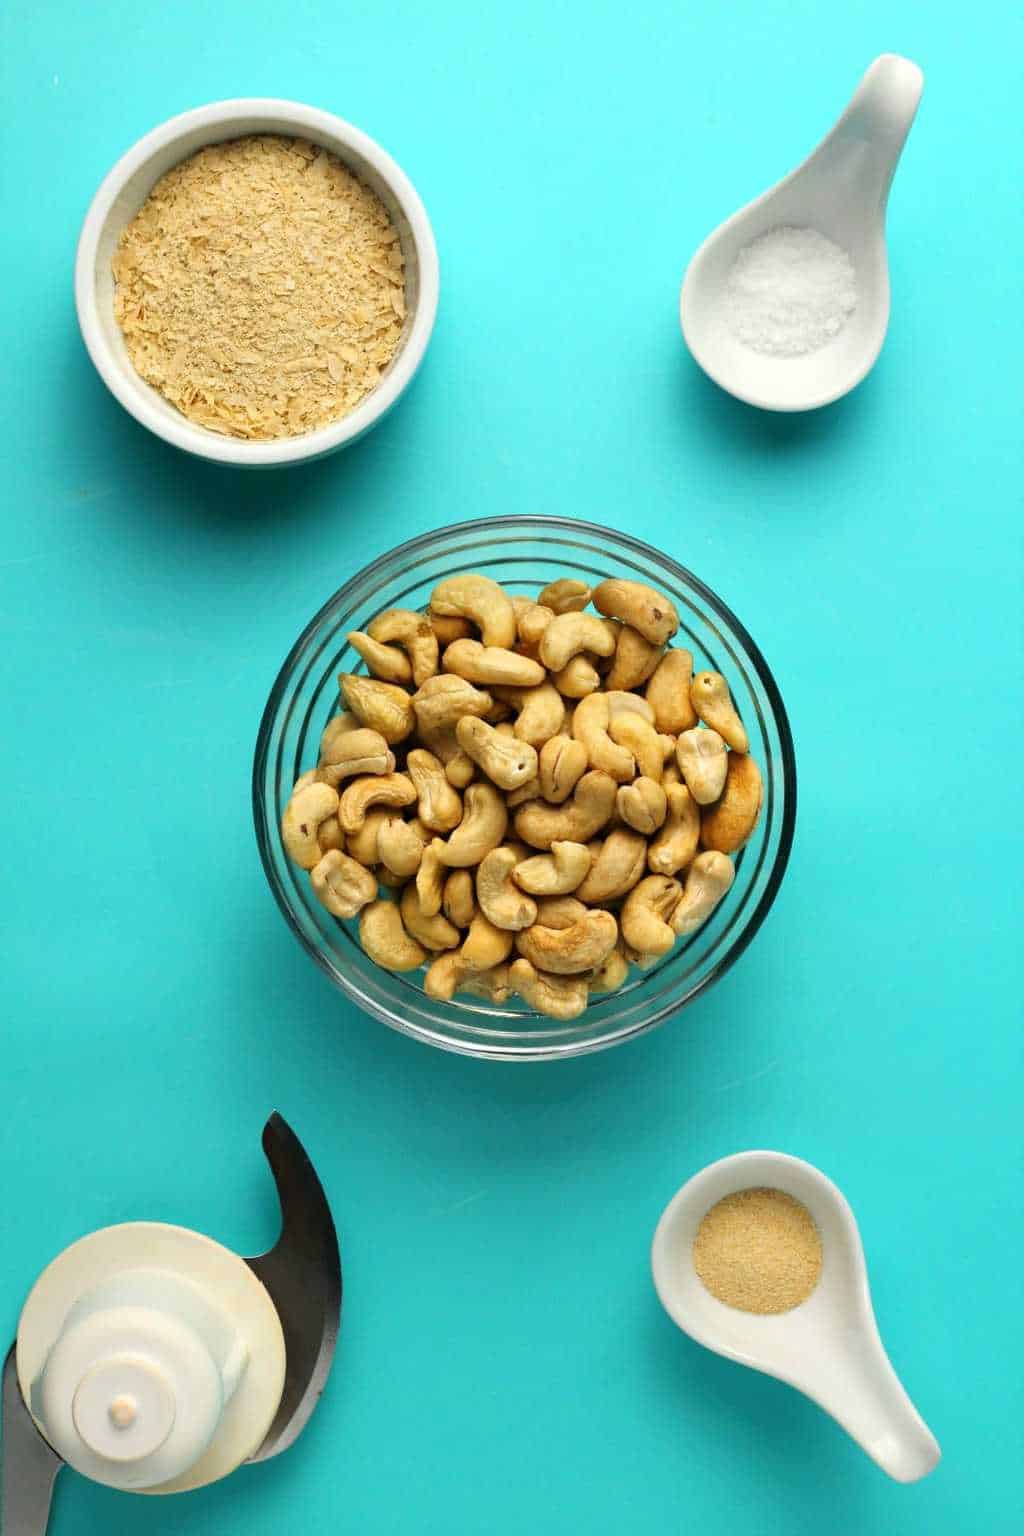 Ingredients to make vegan parmesan cheese, cashew nuts, nutritional yeast, salt and garlic powder. 